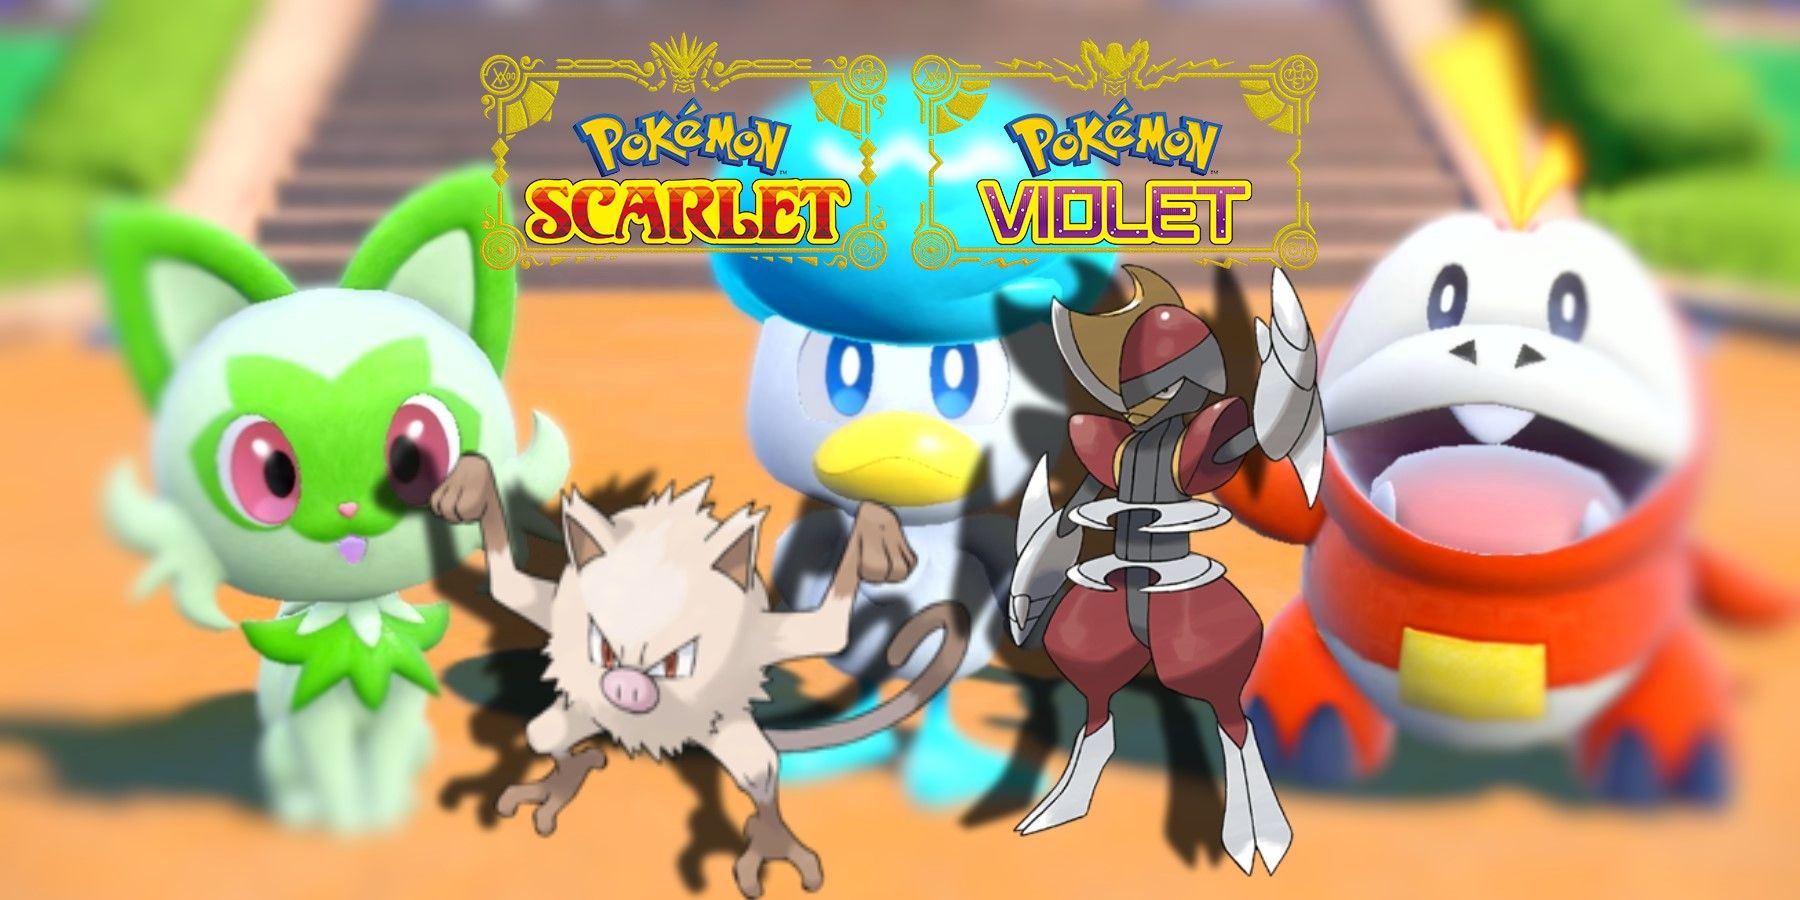 Pokemon Scarlet and Violet Pokedex